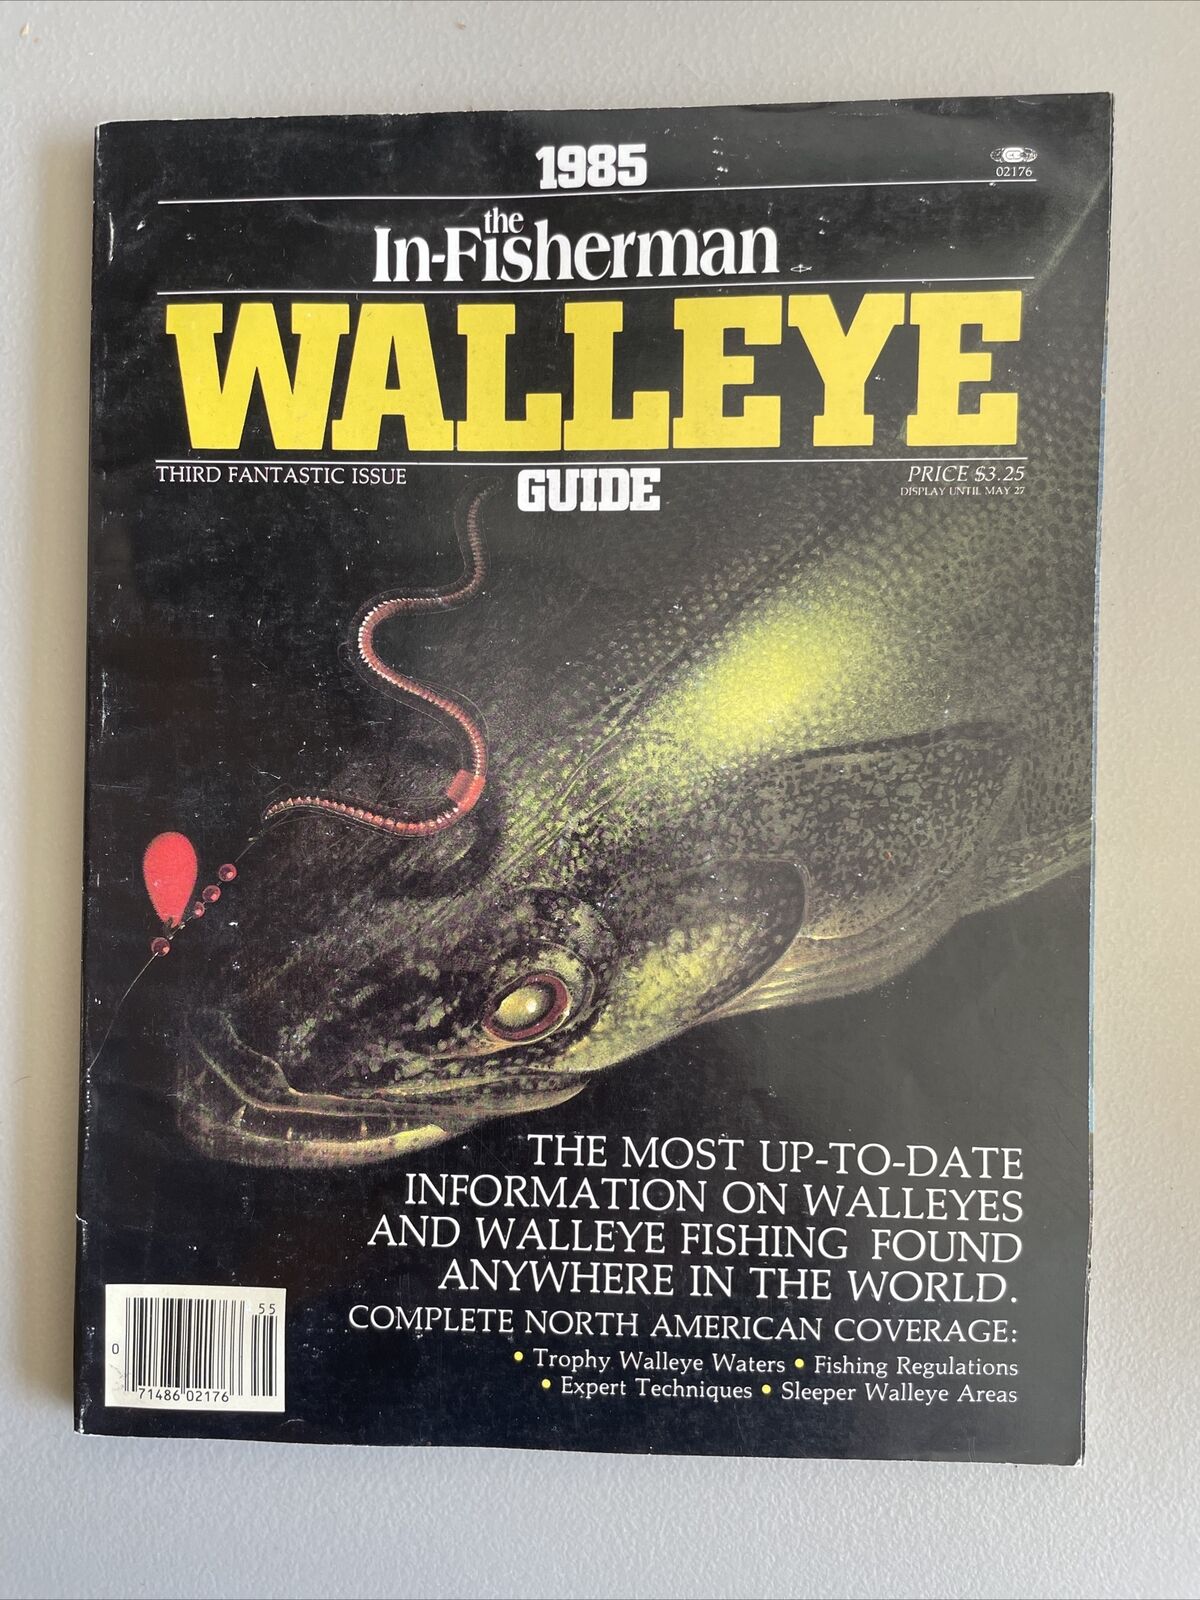 Vintage 1985 “The In Fisherman”Walleye Guide Magazine